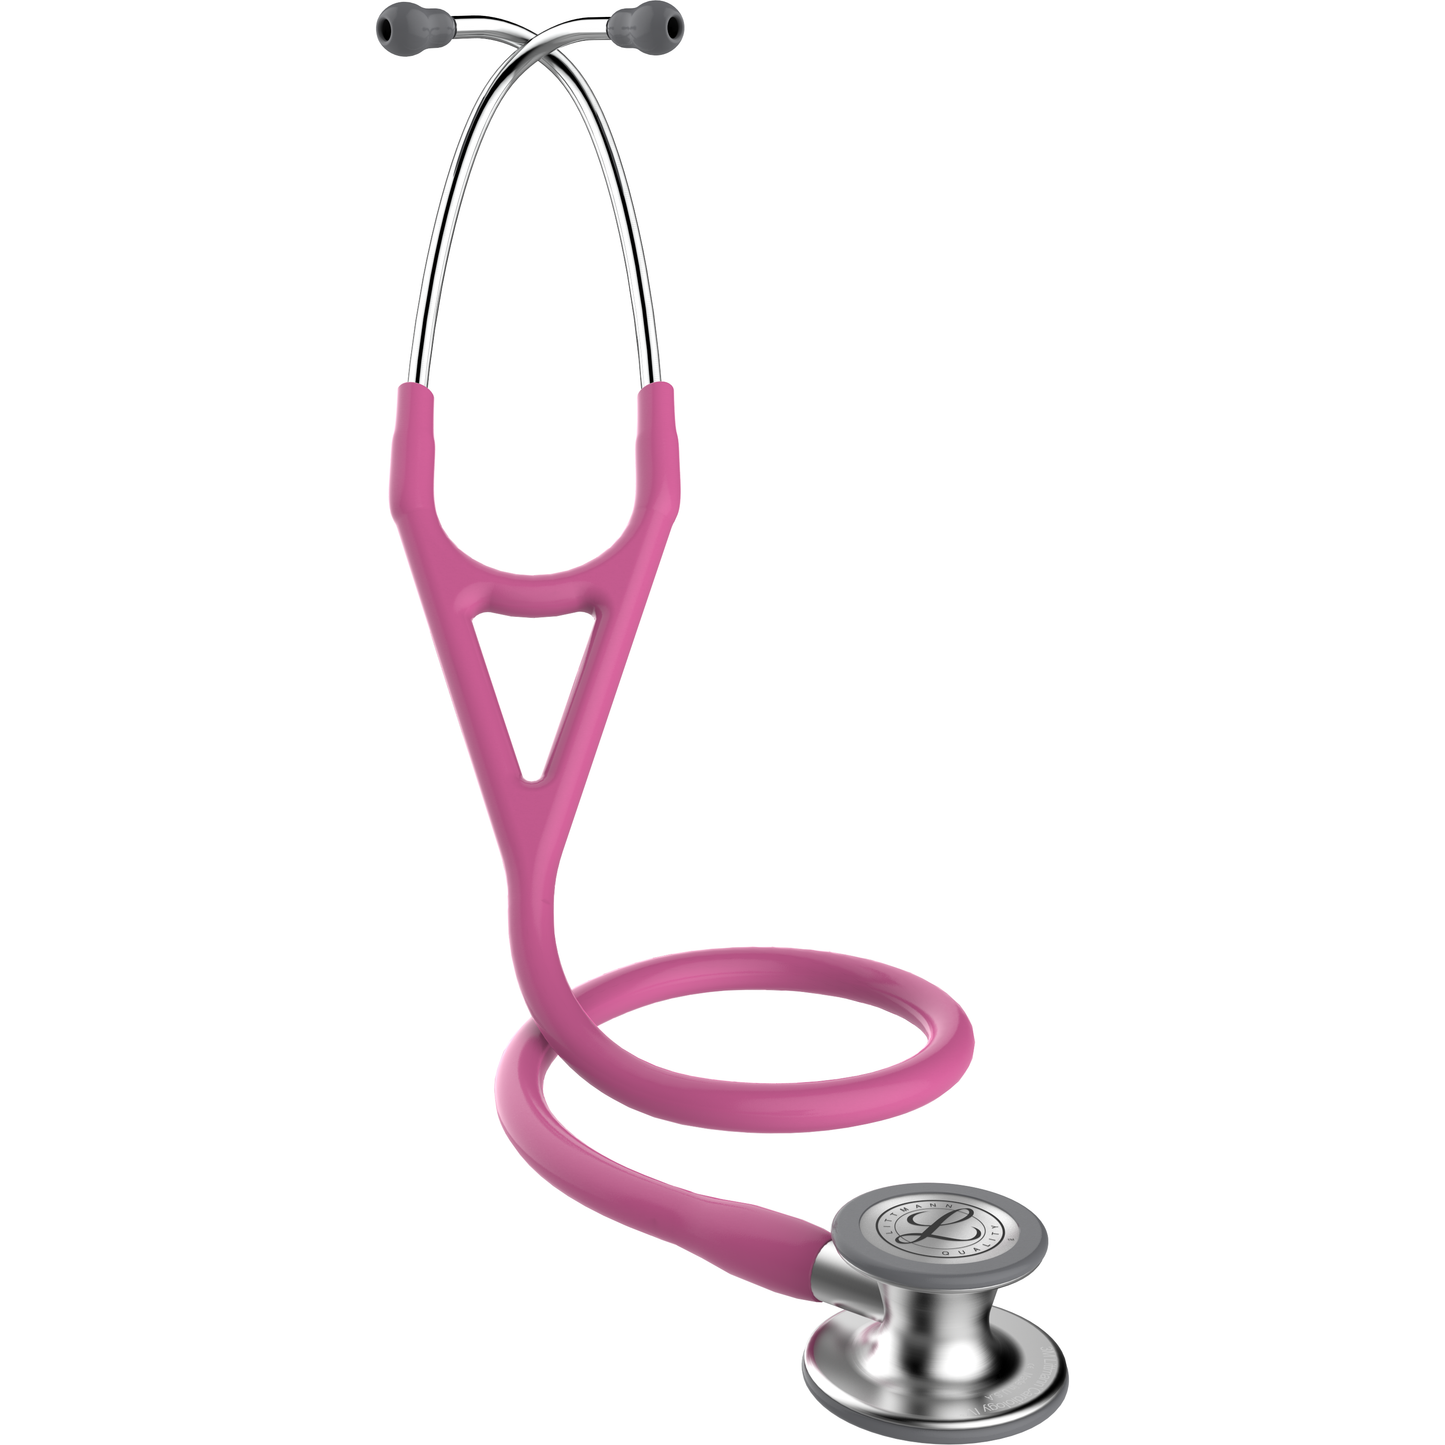 Littmann Cardiology IV Diagnostic Stethoscope: Rose Pink 6159 Stethoscopes 3M Littmann   